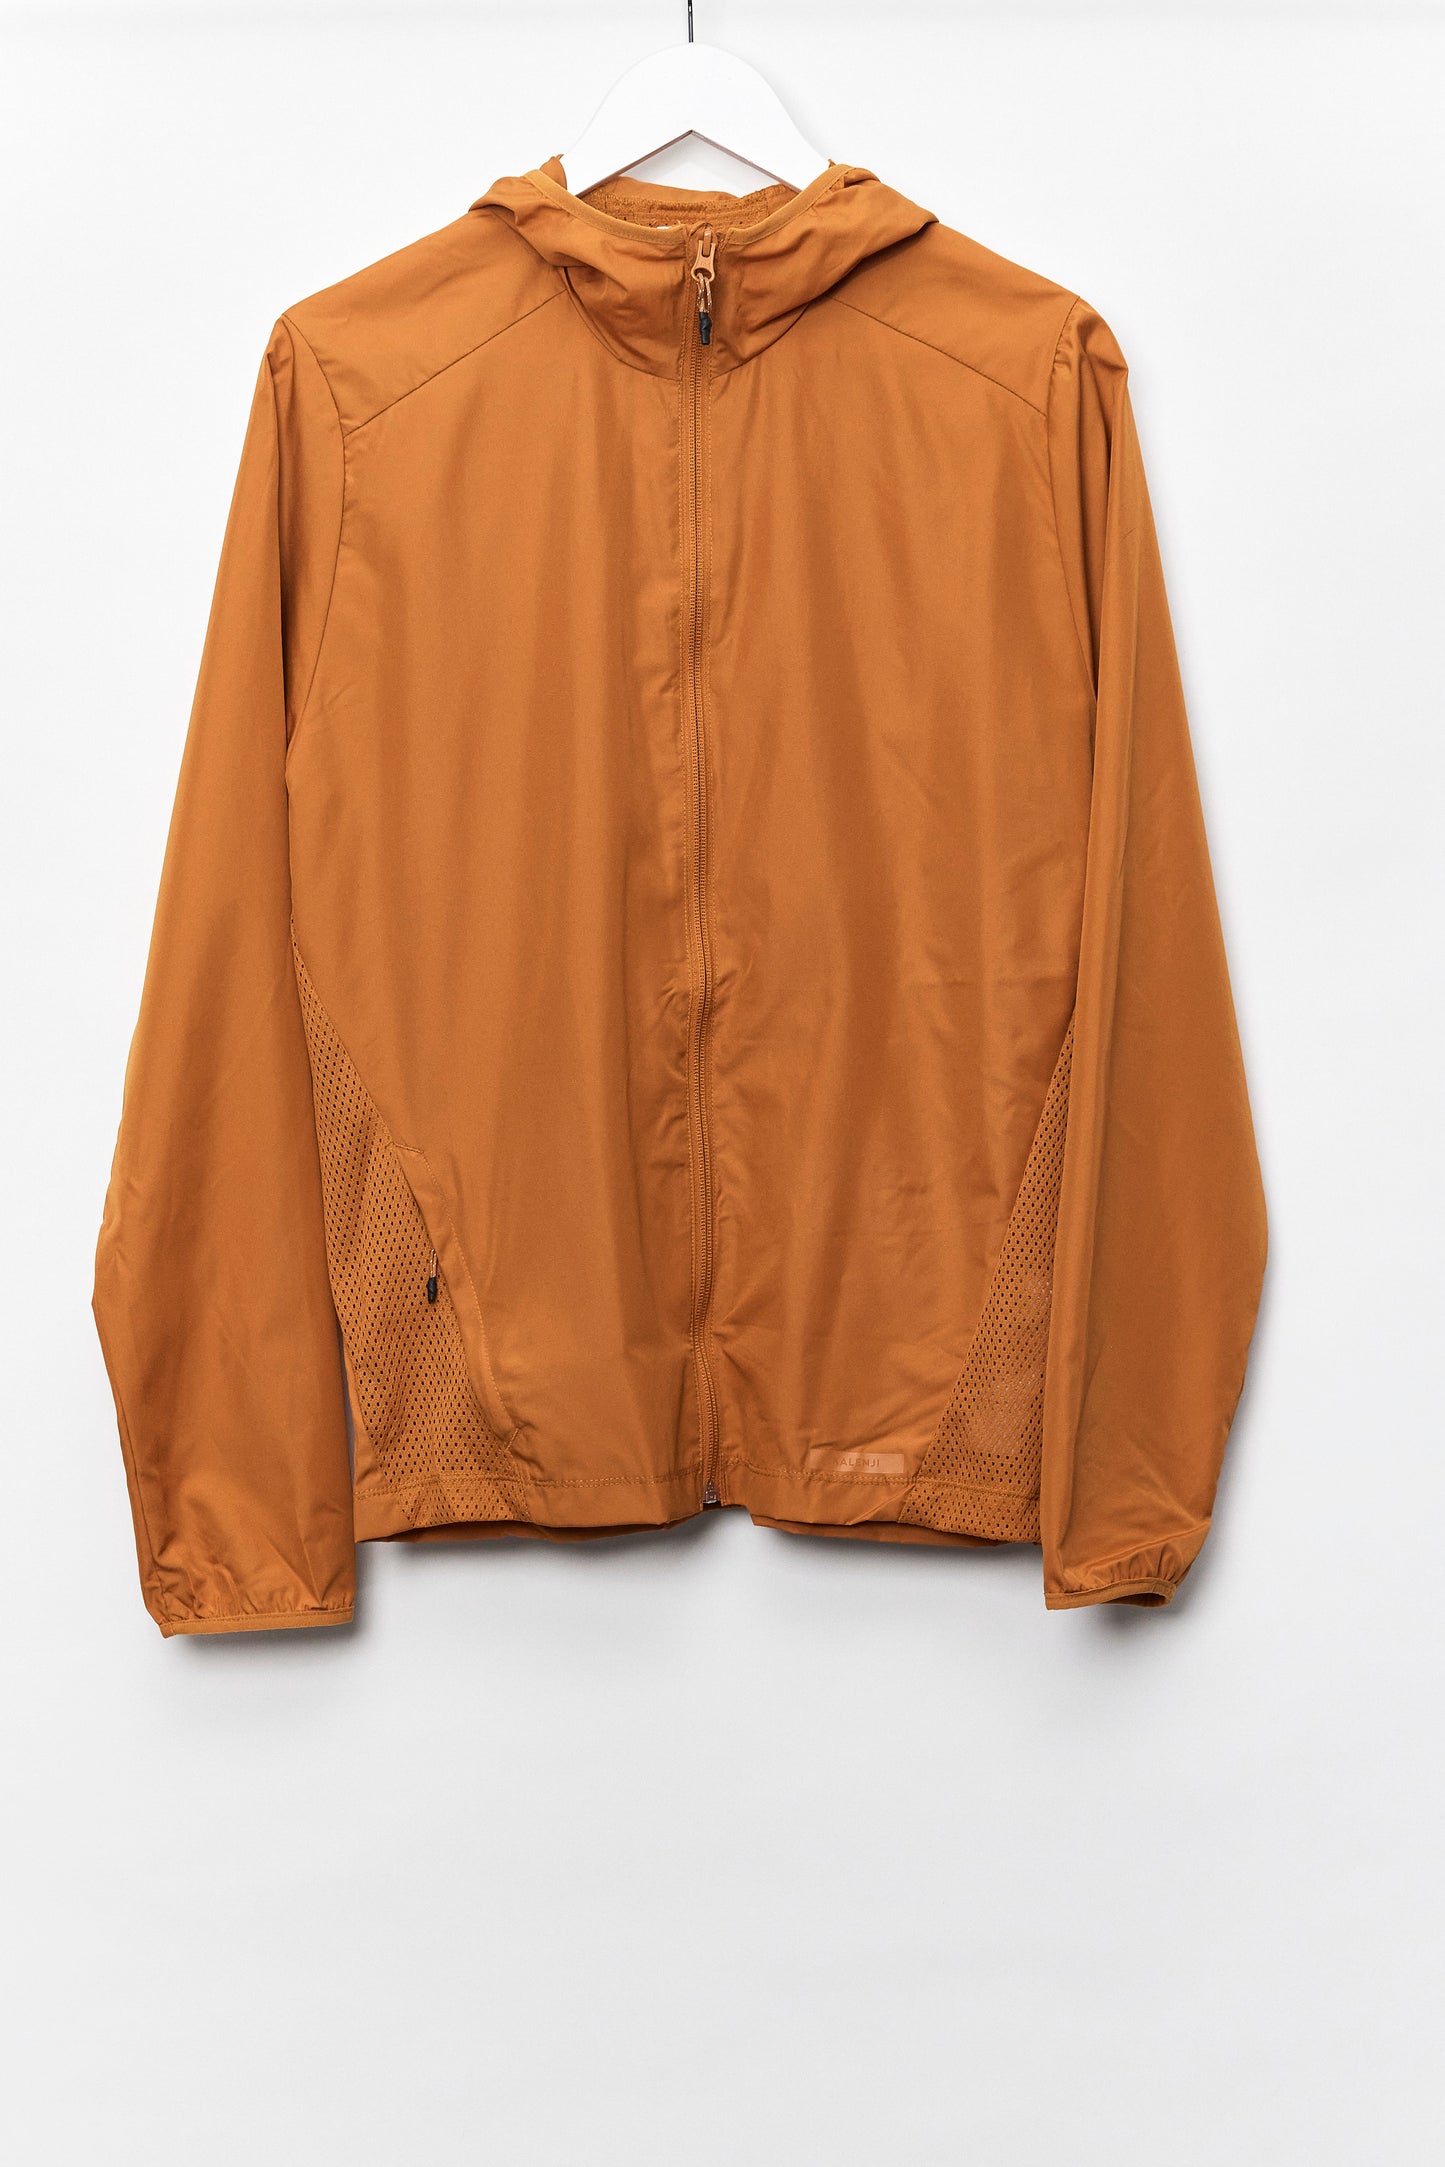 Mens Burnt Orange Running Jacket size Medium